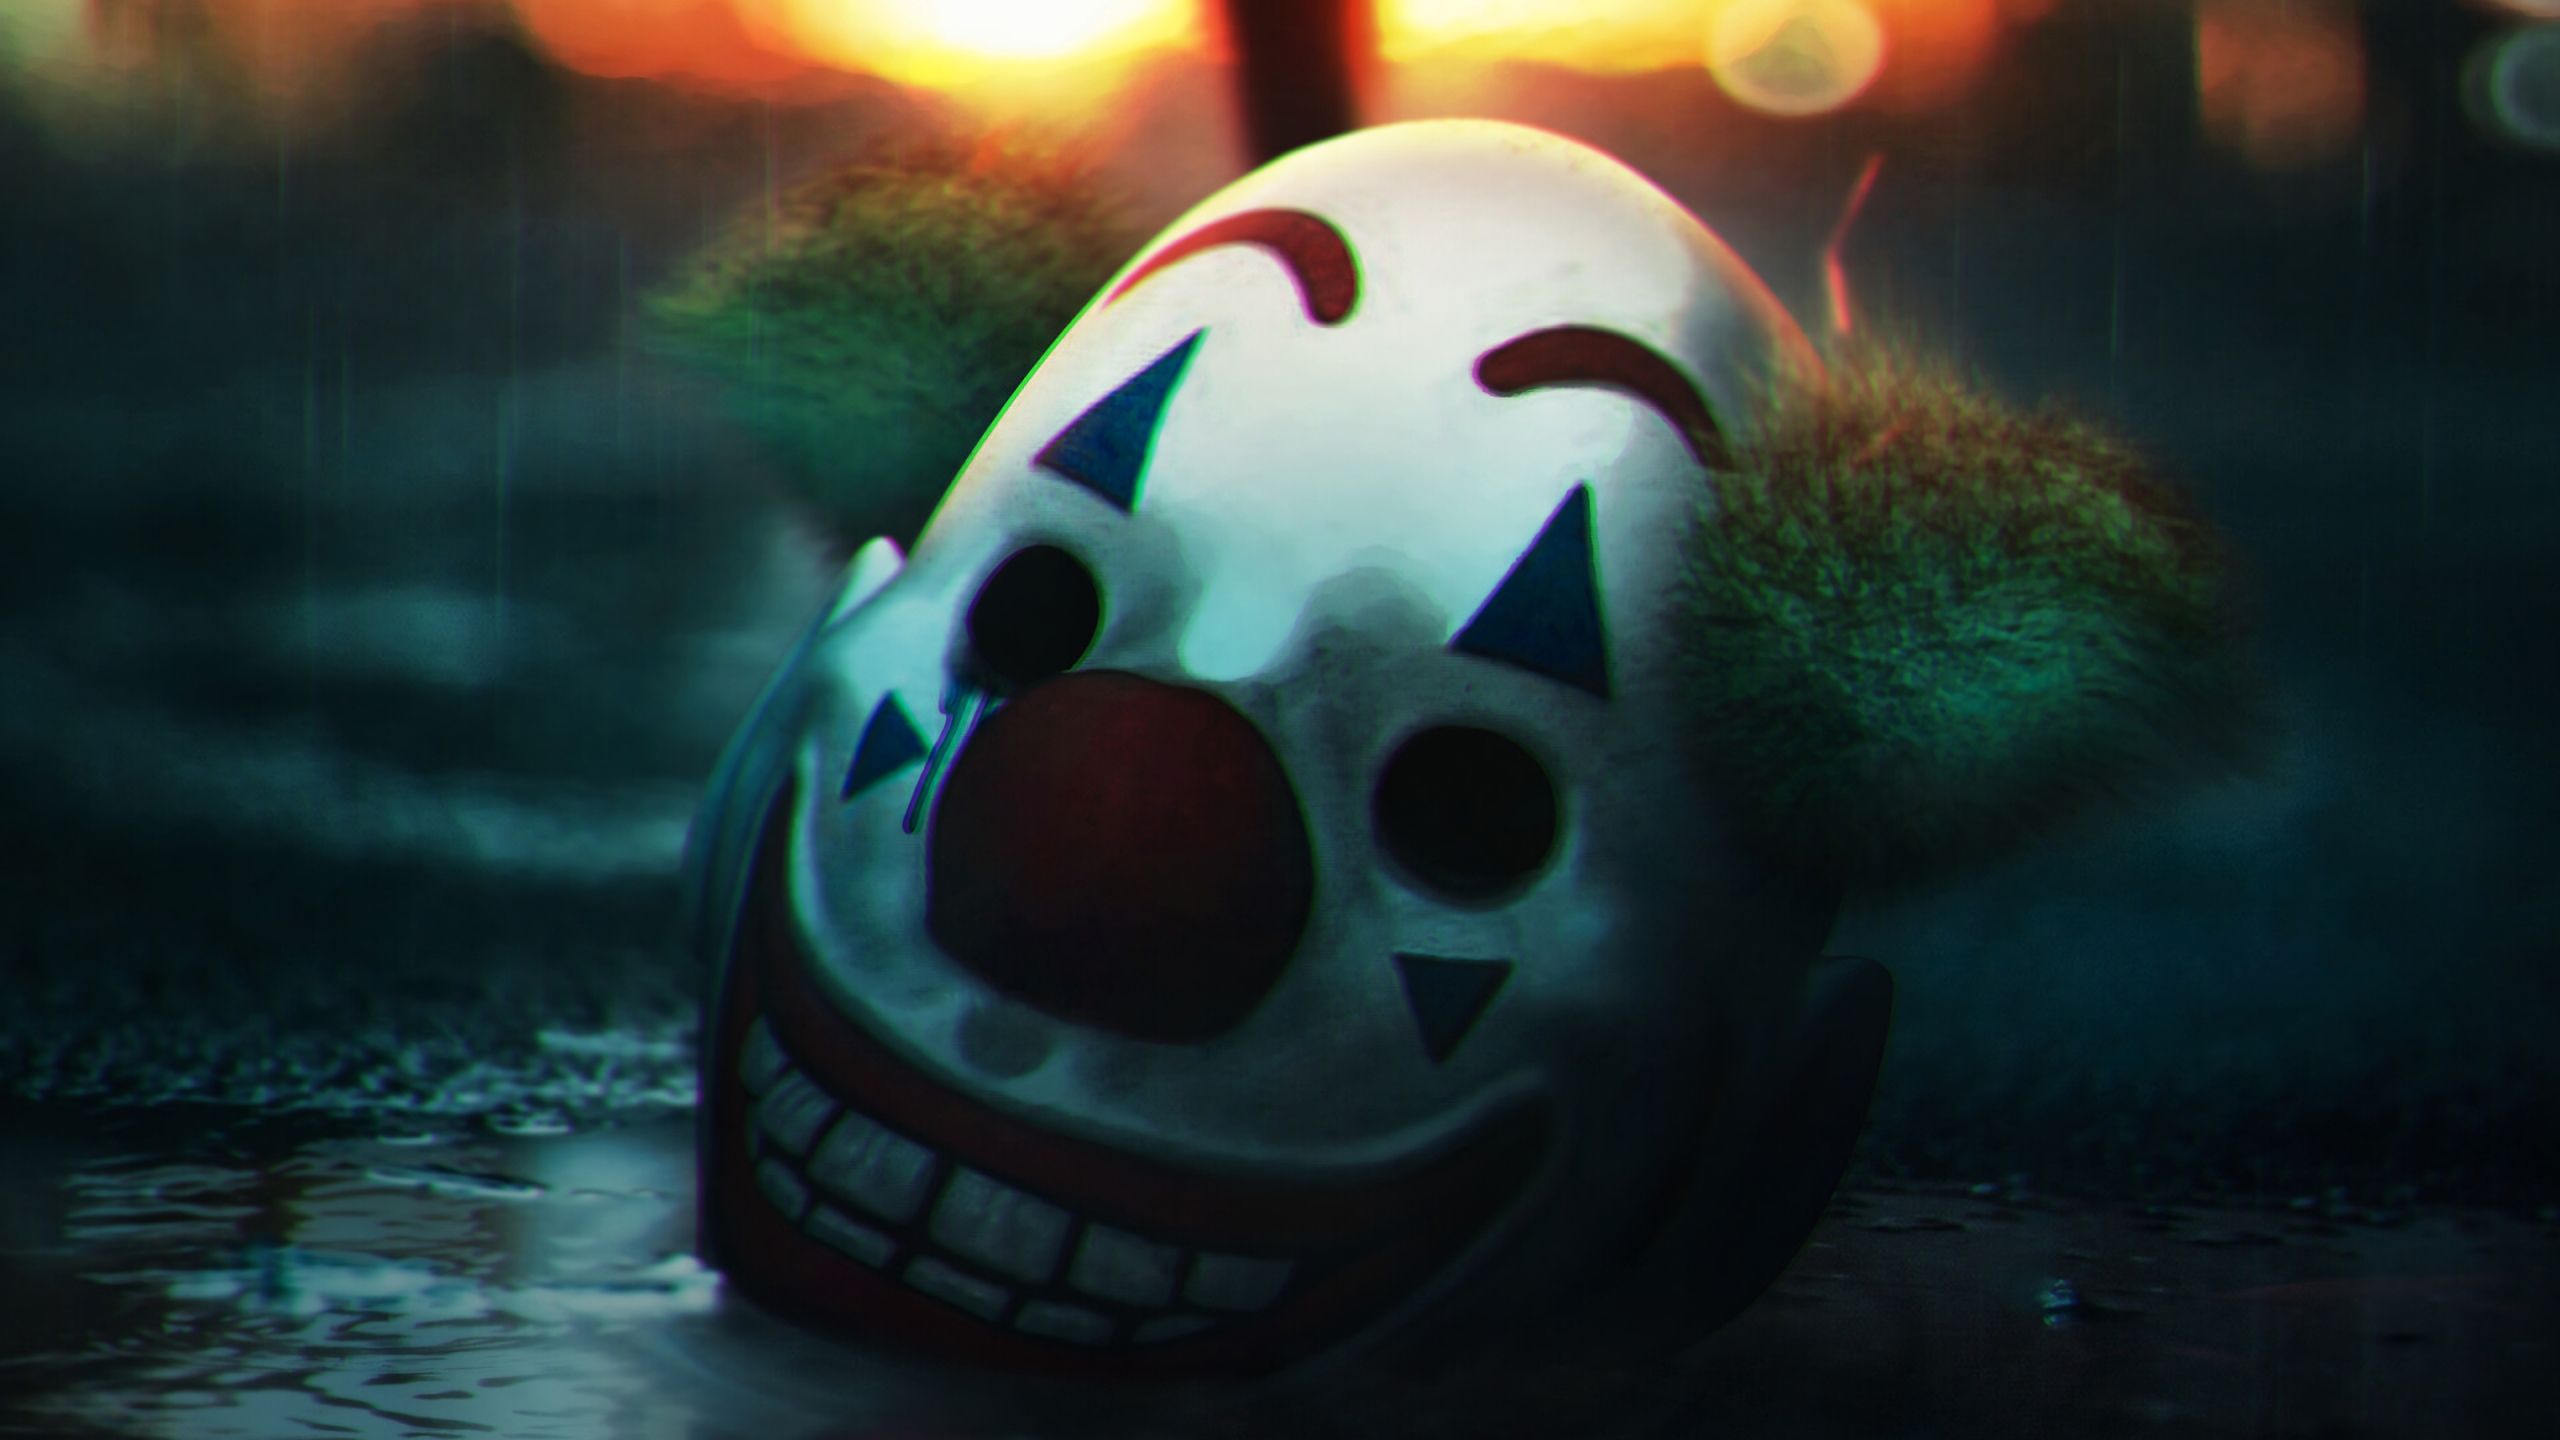 Creepy Joker Smile 1440P Resolution Wallpaper, HD Artist